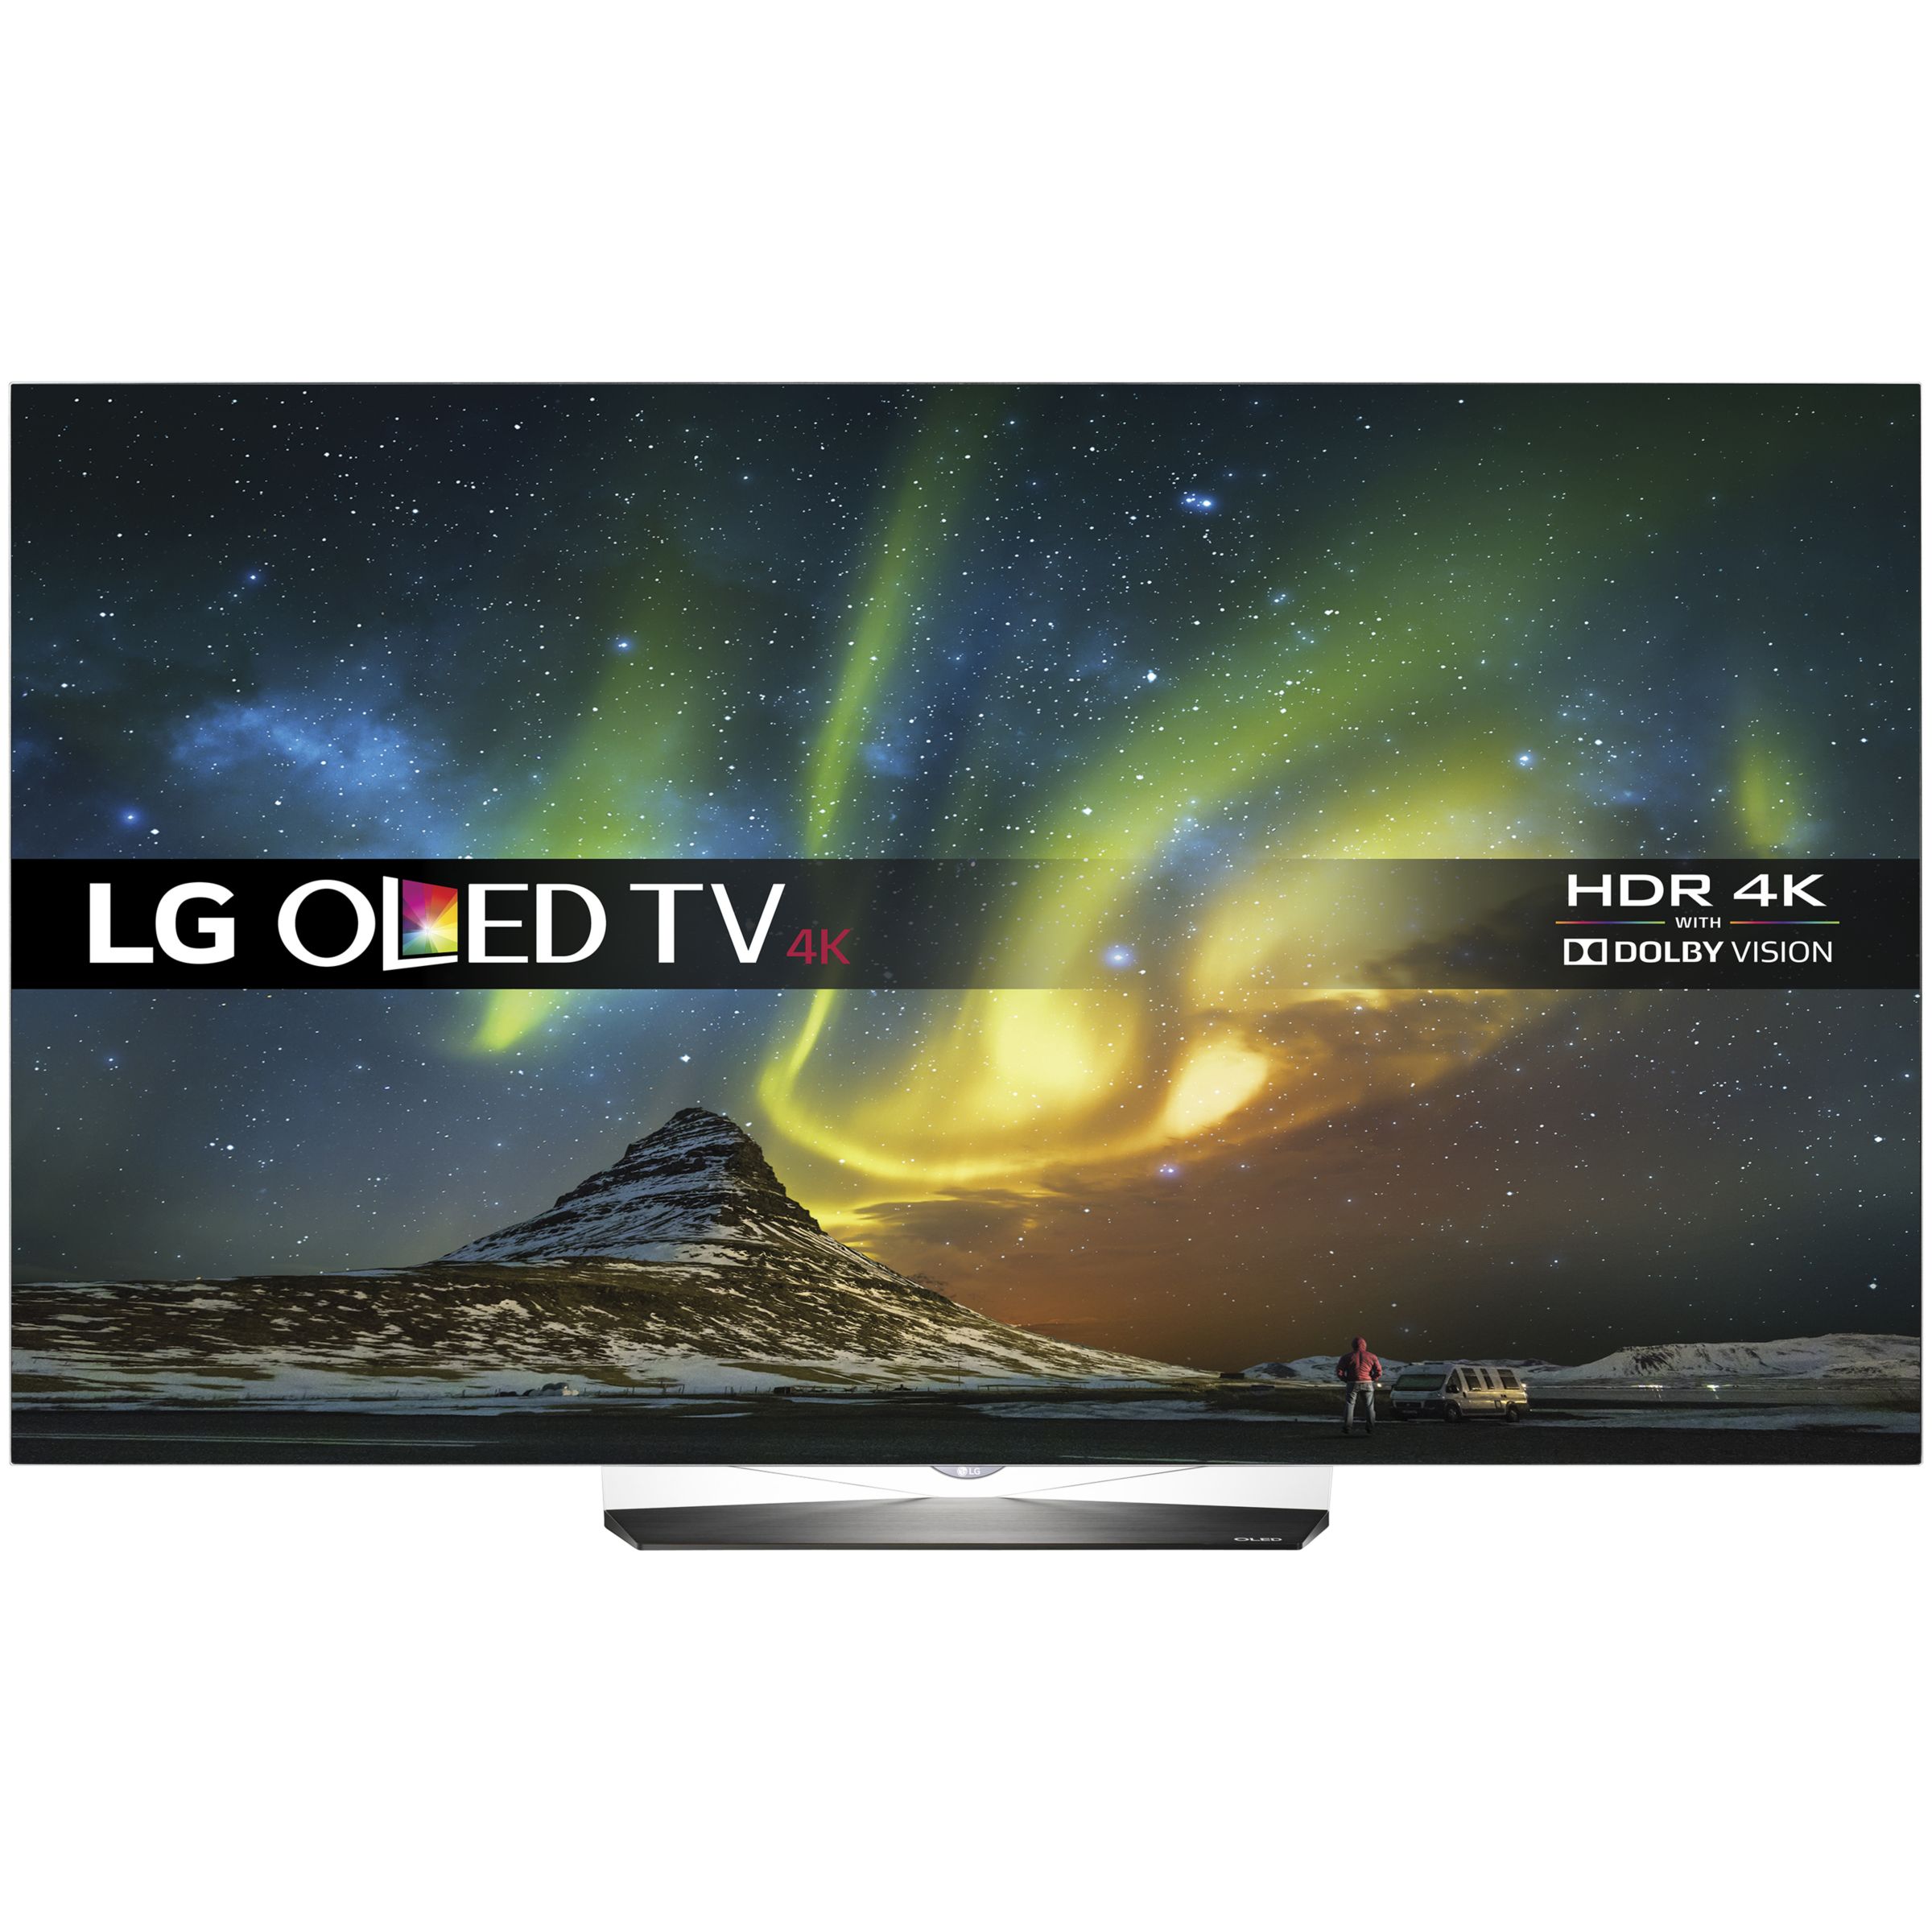 LG OLED55B6V OLED HDR 4K Ultra HD Smart TV, 55" with Freeview HD/Freesat HD, Harman/Kardon Sound & Blade Slim Design, Ultra HD Premium Certified